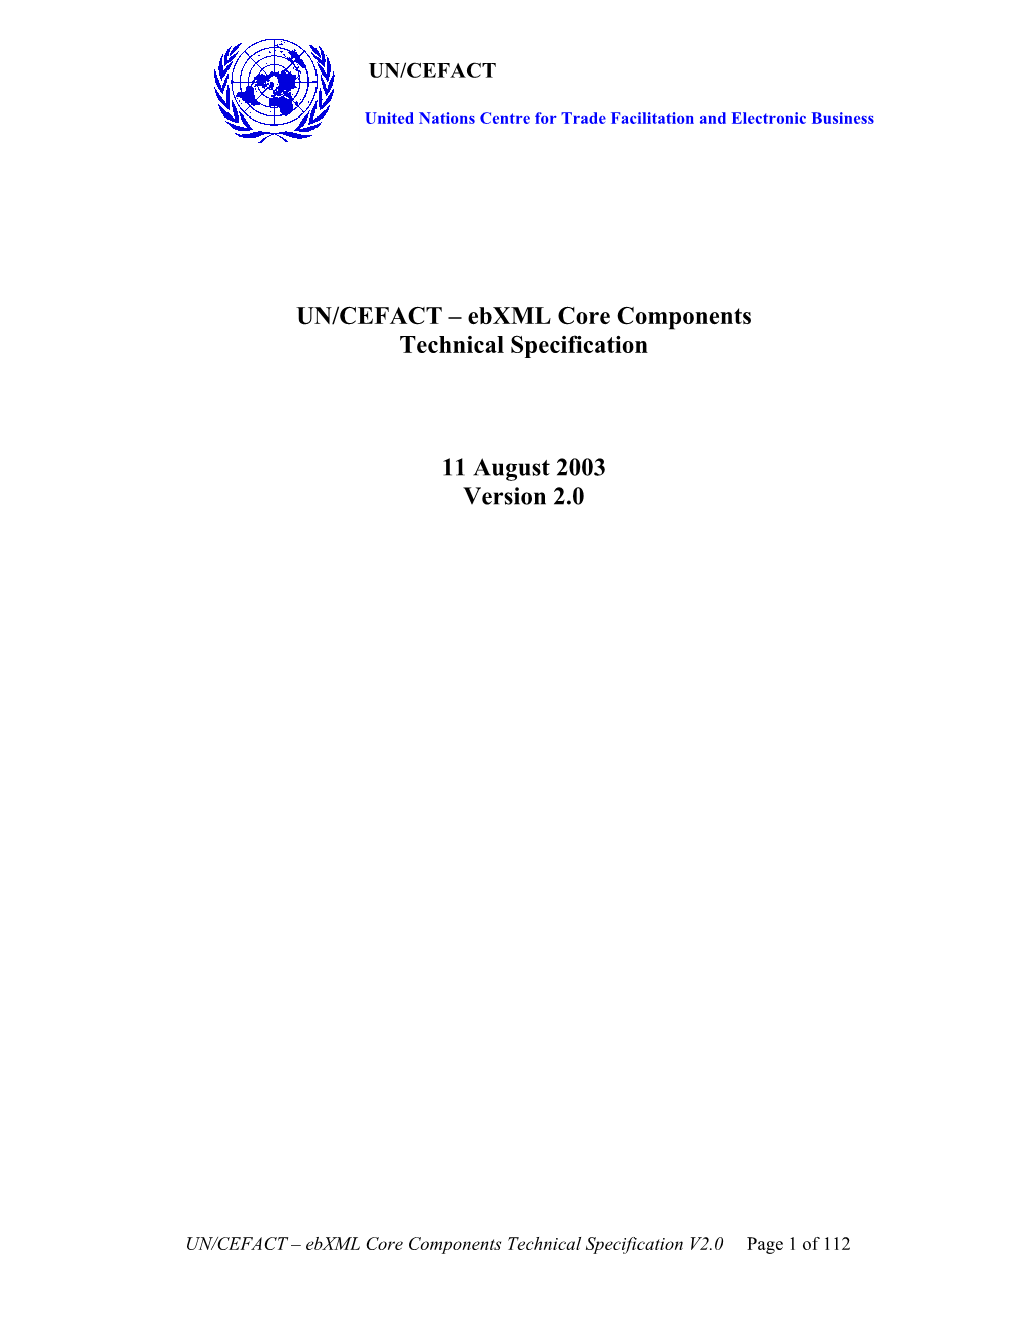 Ebxml Core Components Technical Specification 11 August 2003